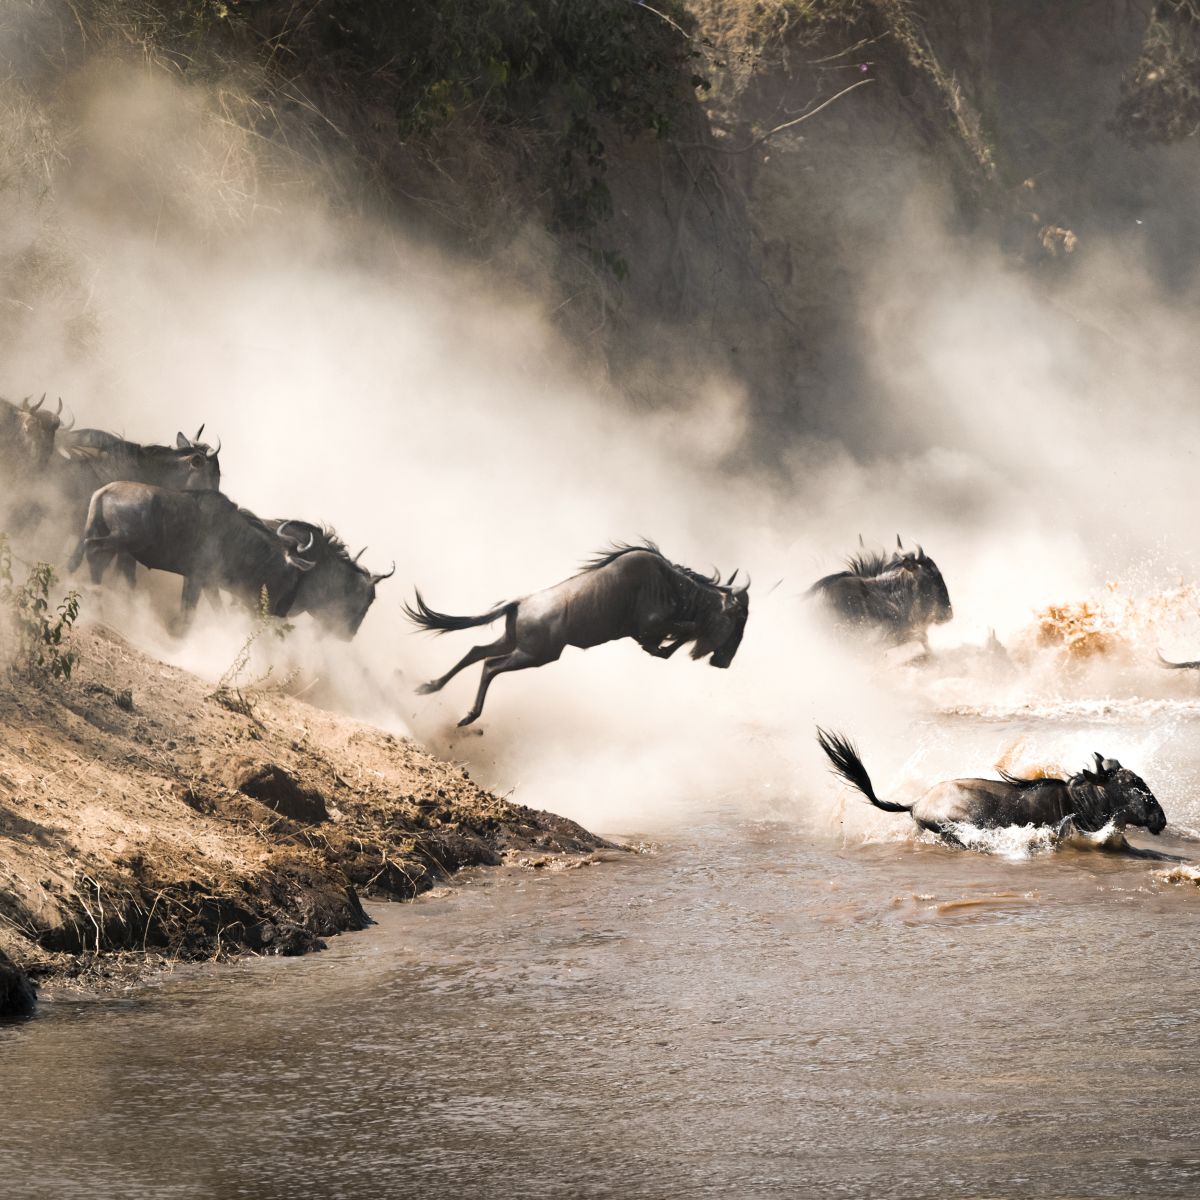 Wildebeests of Great Migration crossing river